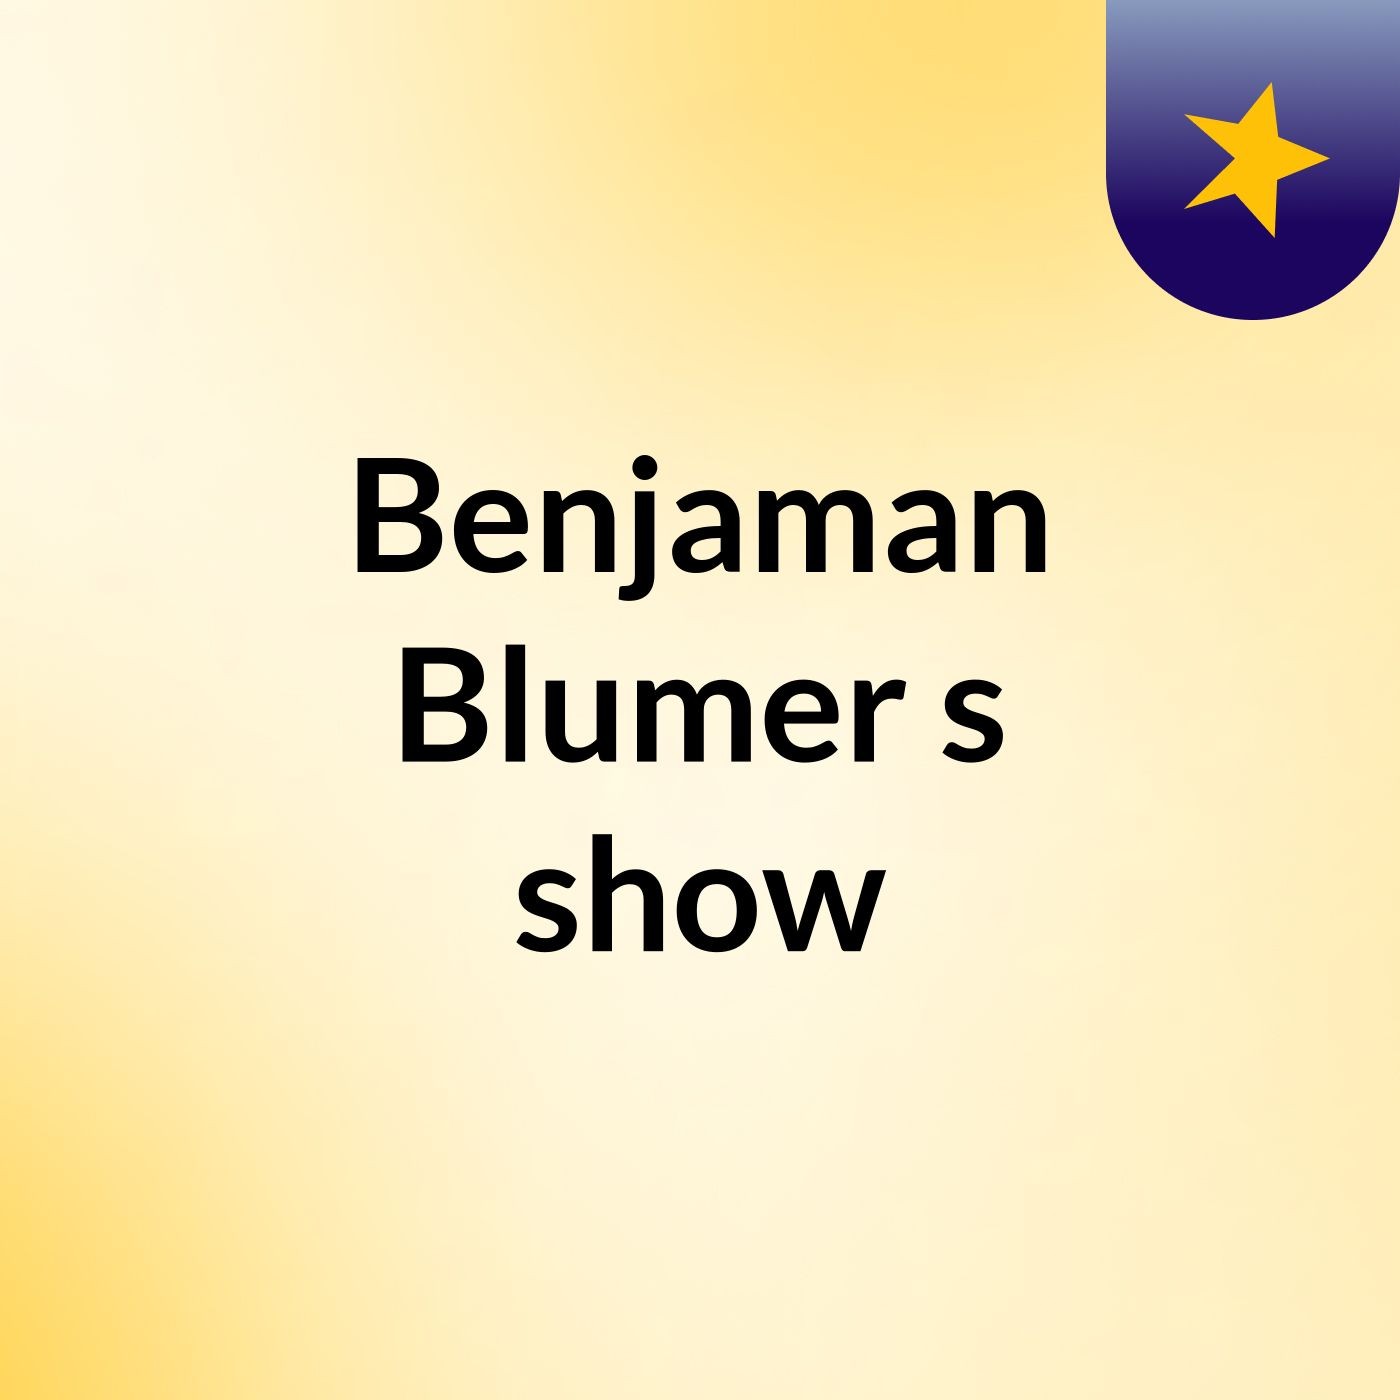 Benjaman Blumer's show